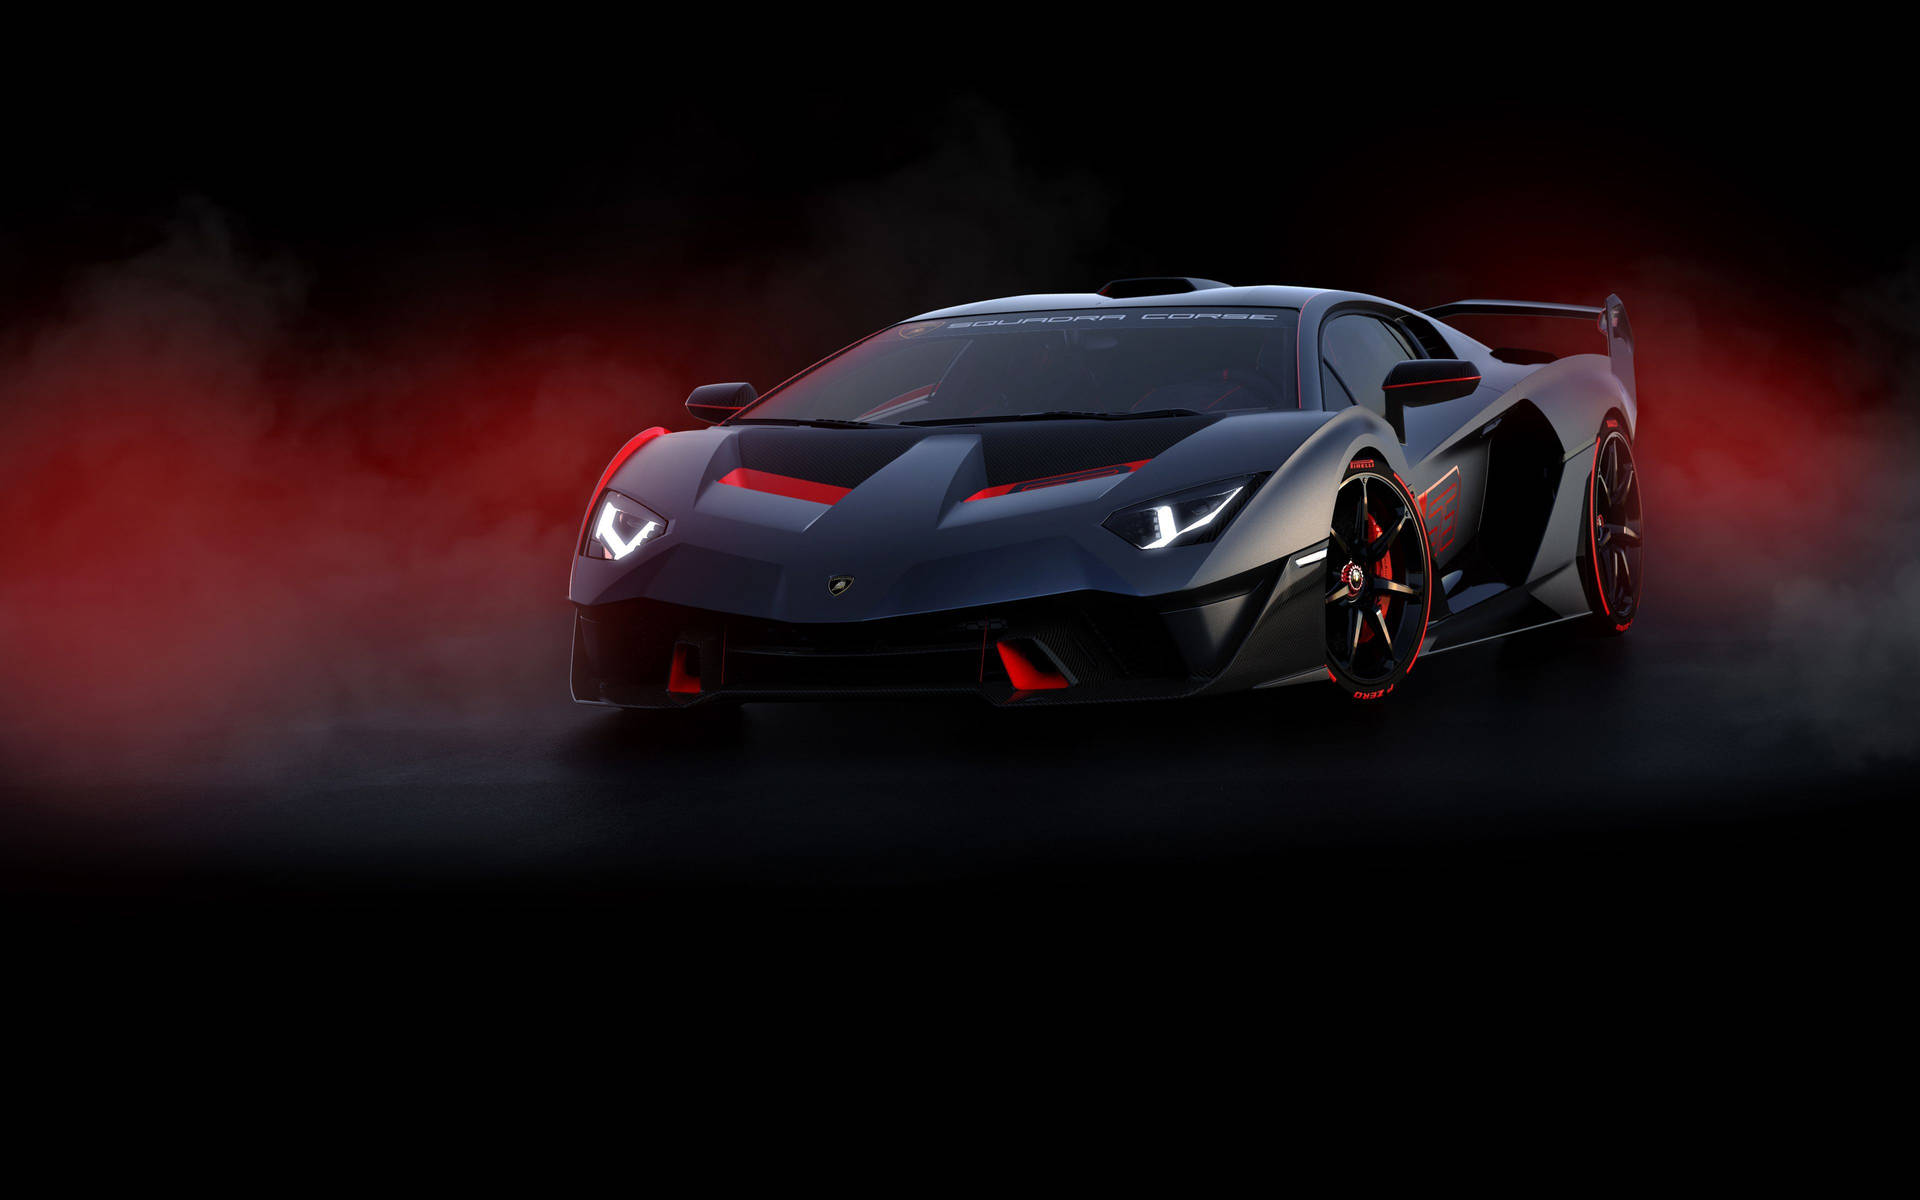 Cool Cars: Lamborghini From The Dark Wallpaper